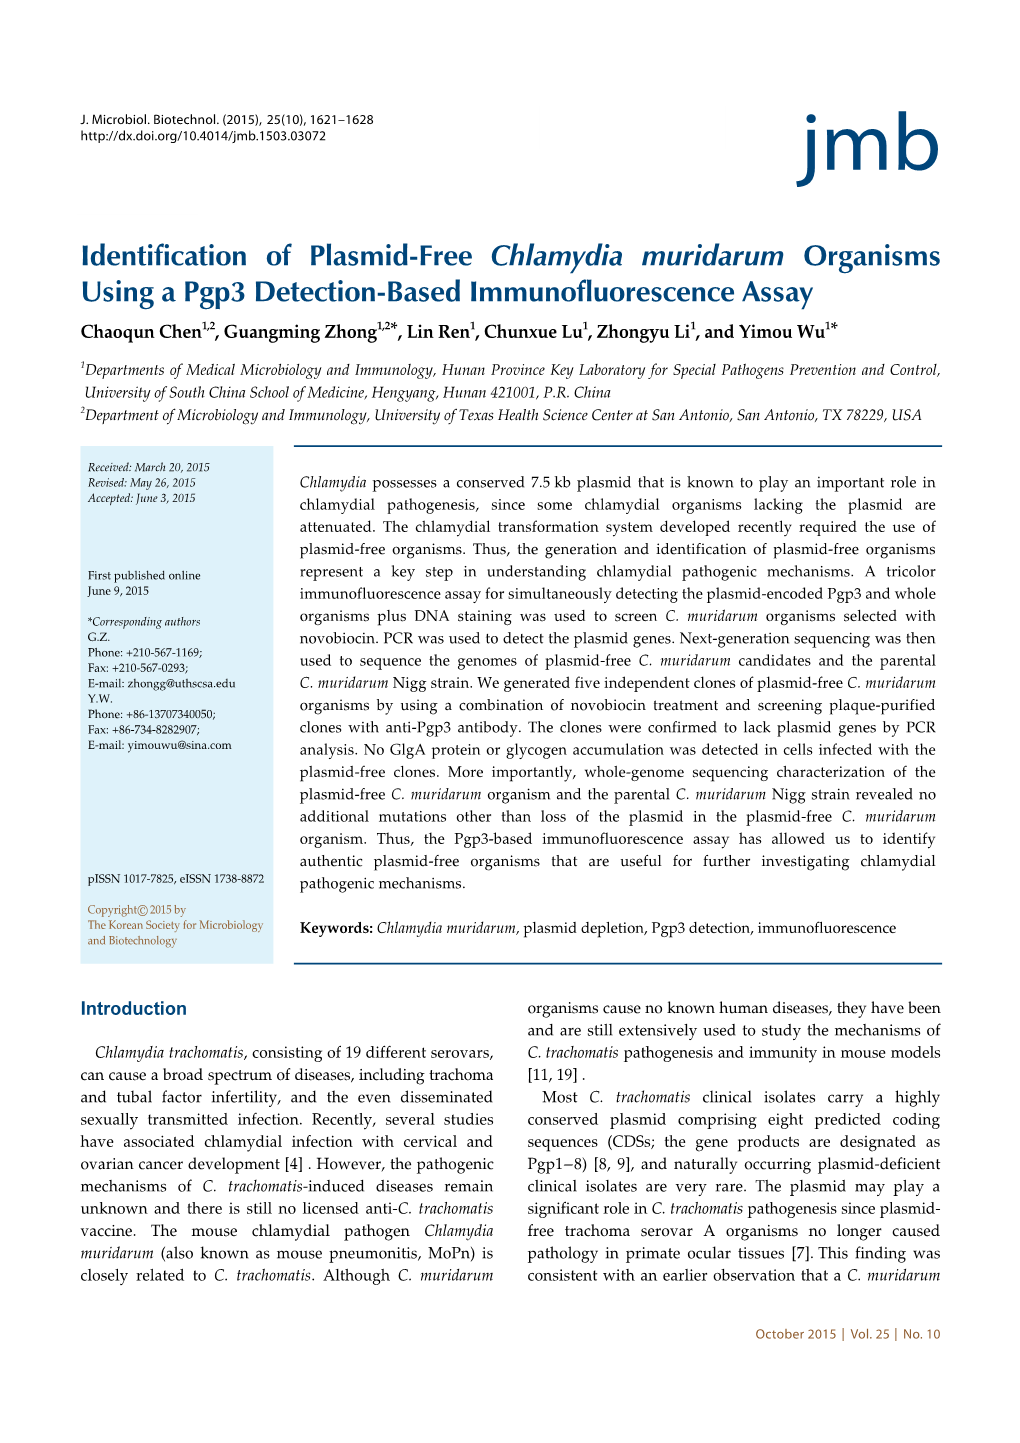 Identification of Plasmid-Free Chlamydia Muridarum Organisms